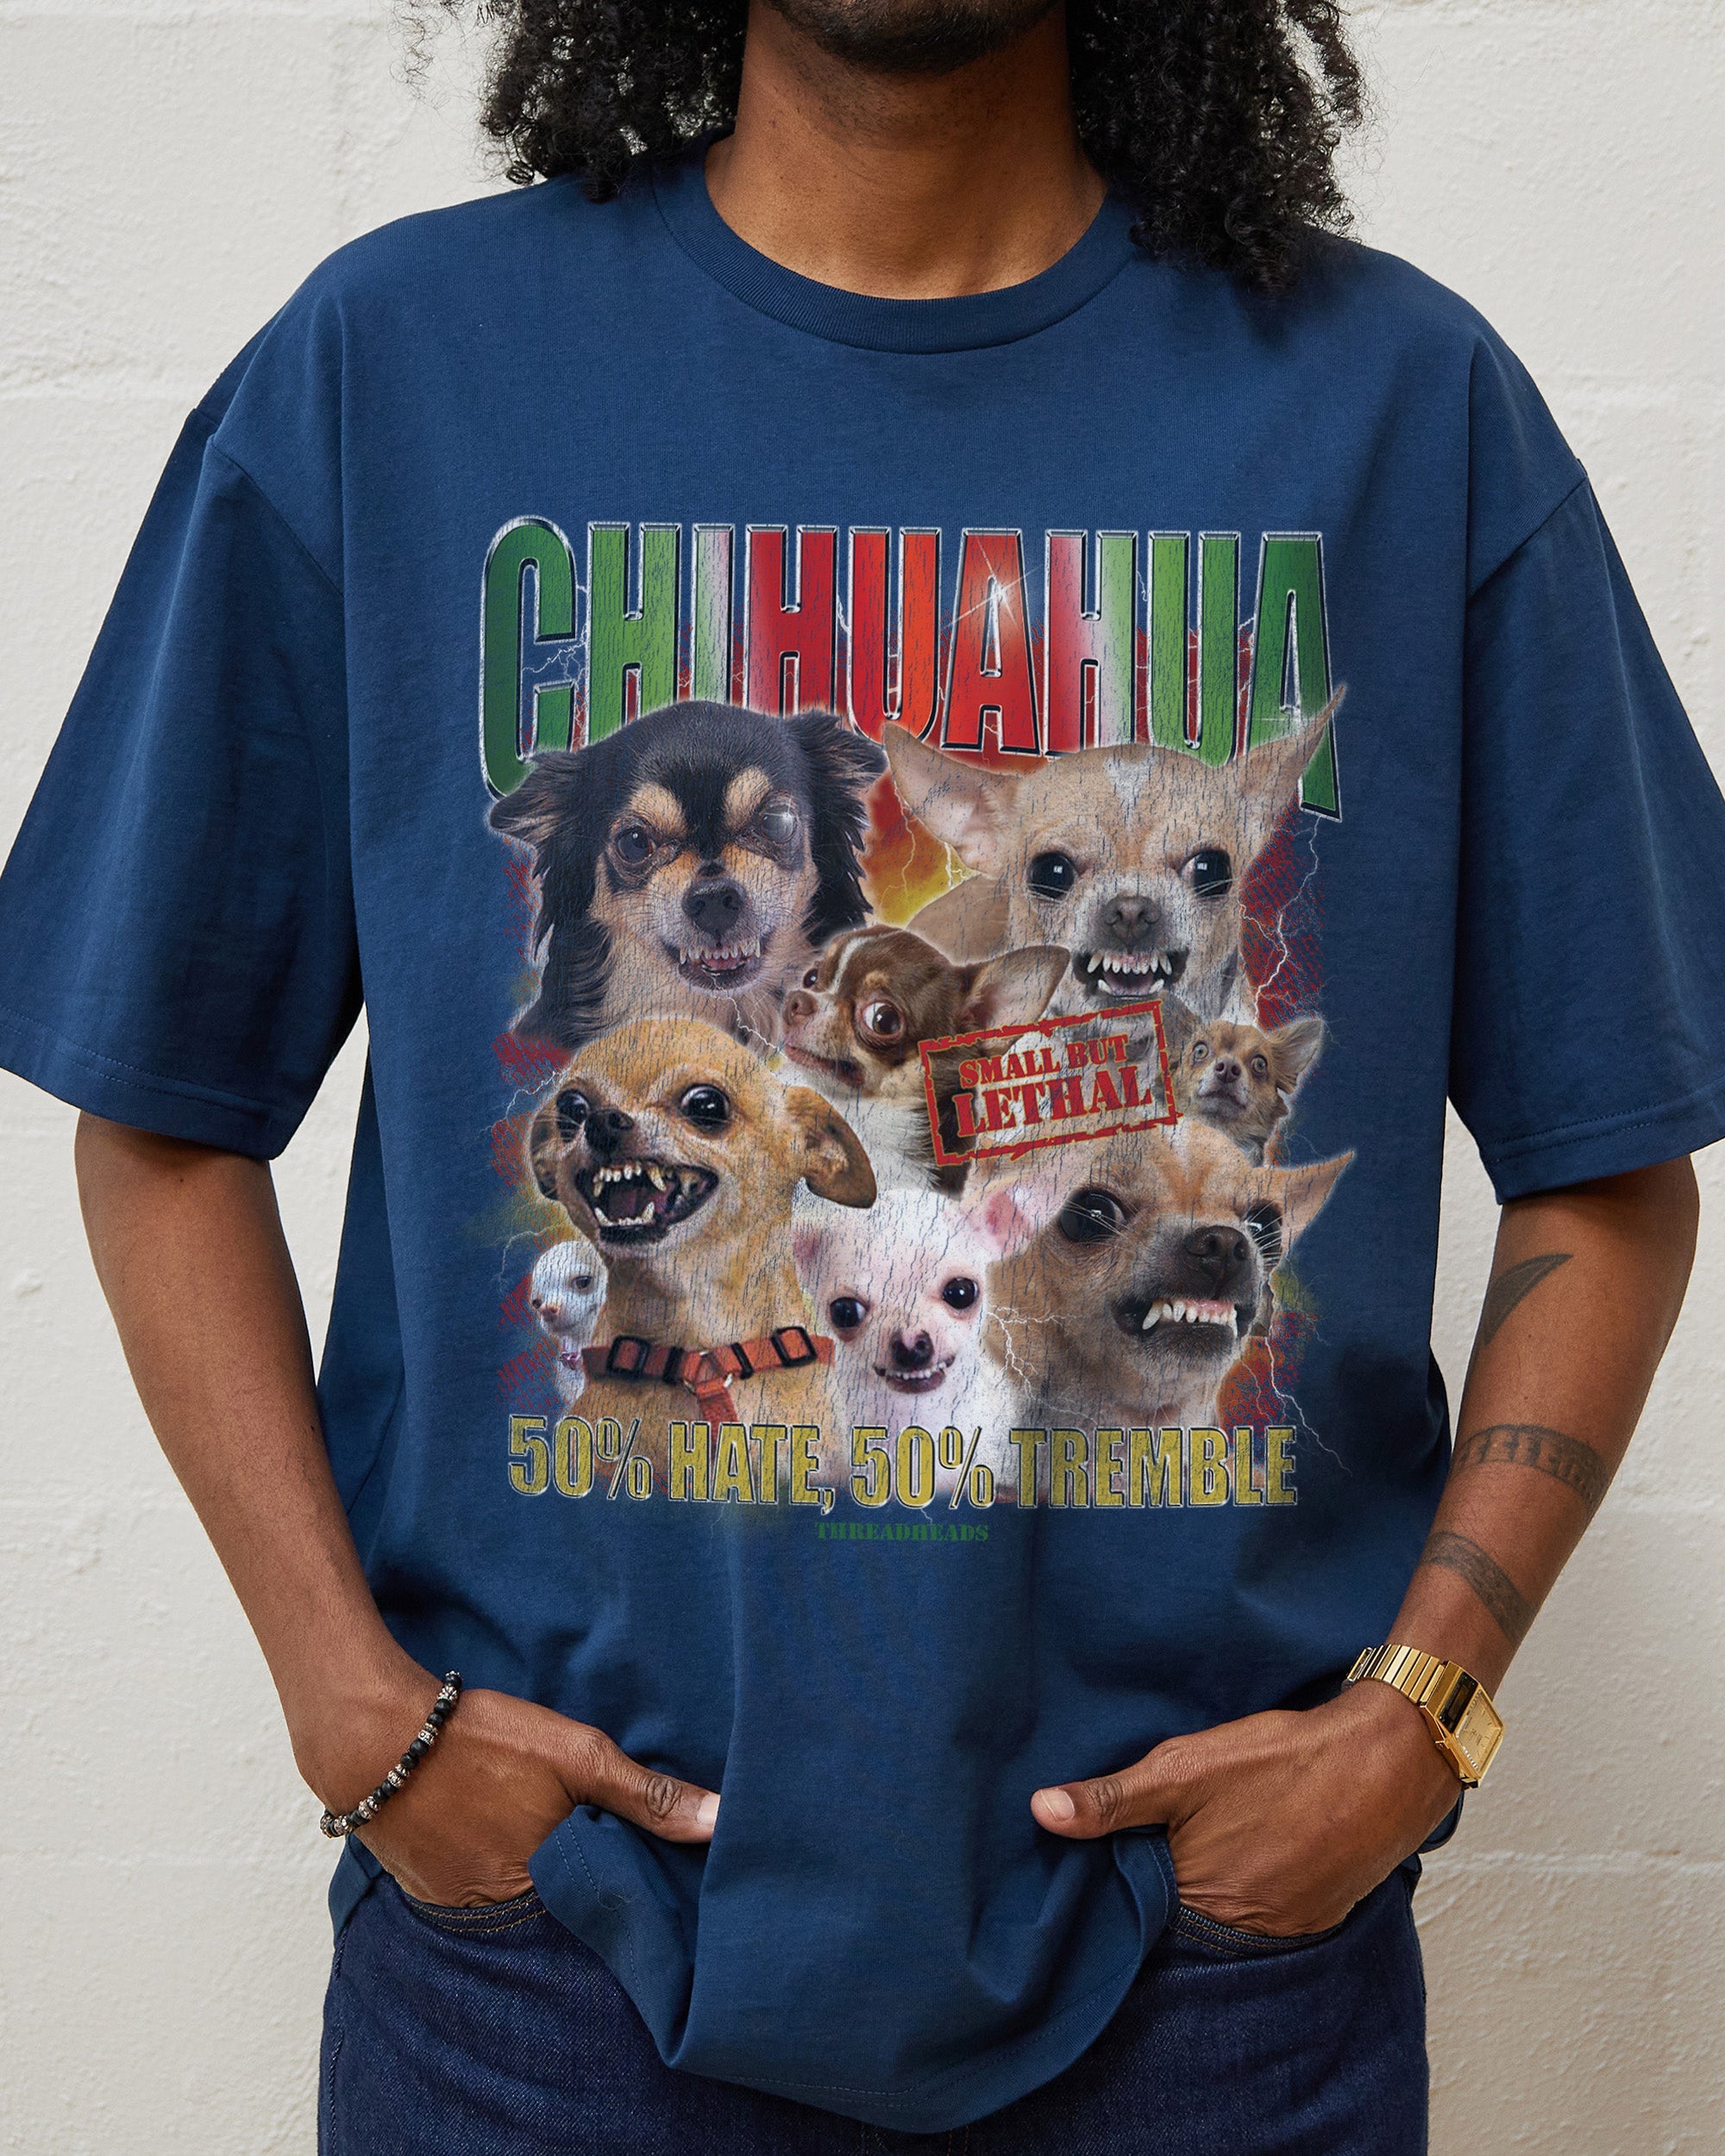 The Chihuahua T-Shirt Australia Online Navy